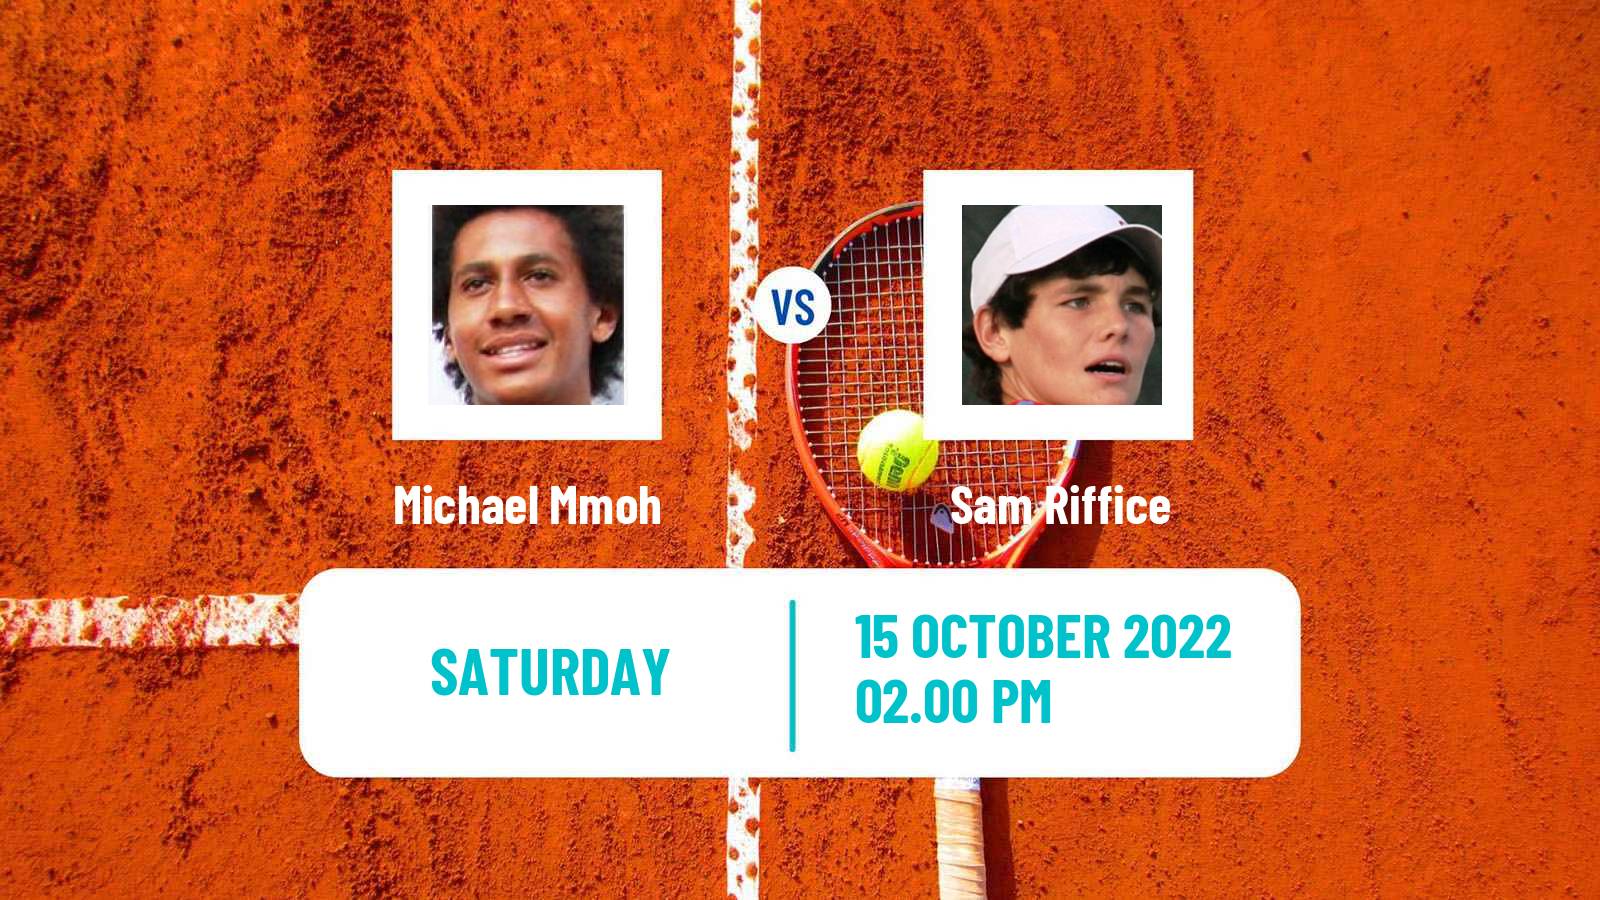 Tennis ATP Challenger Michael Mmoh - Sam Riffice